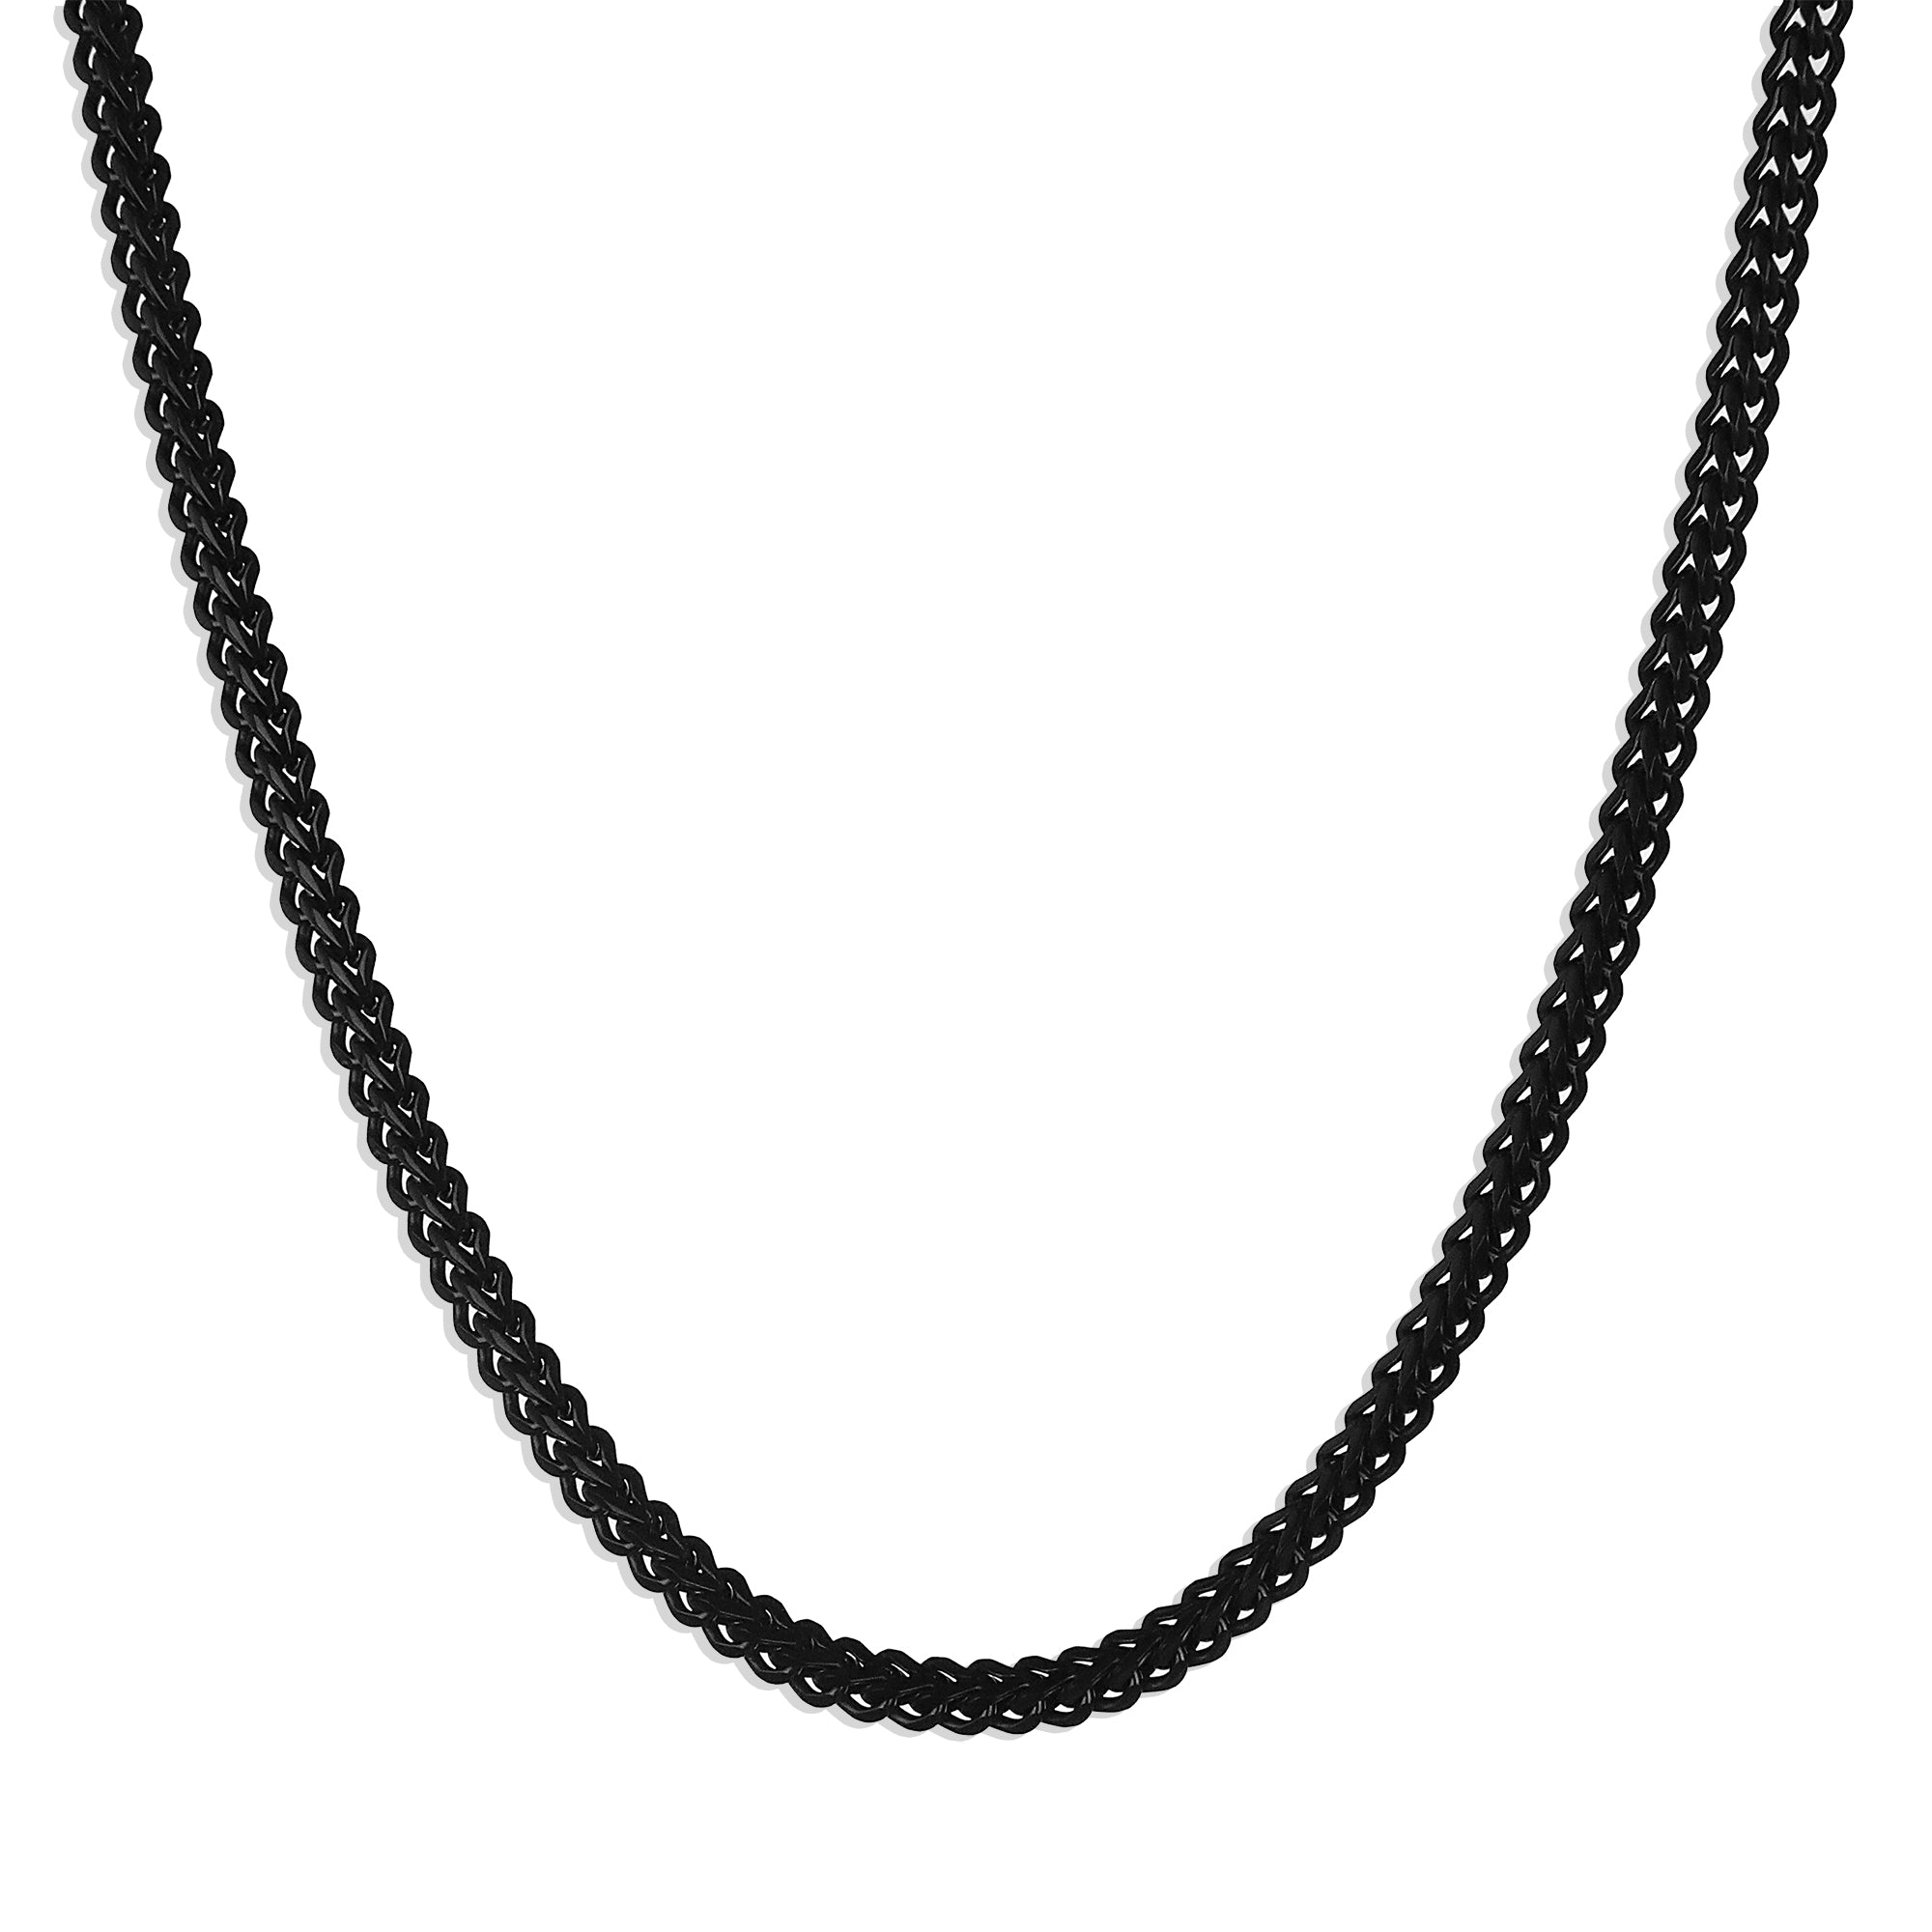 Franco Chain Necklace - Black 2.5mm